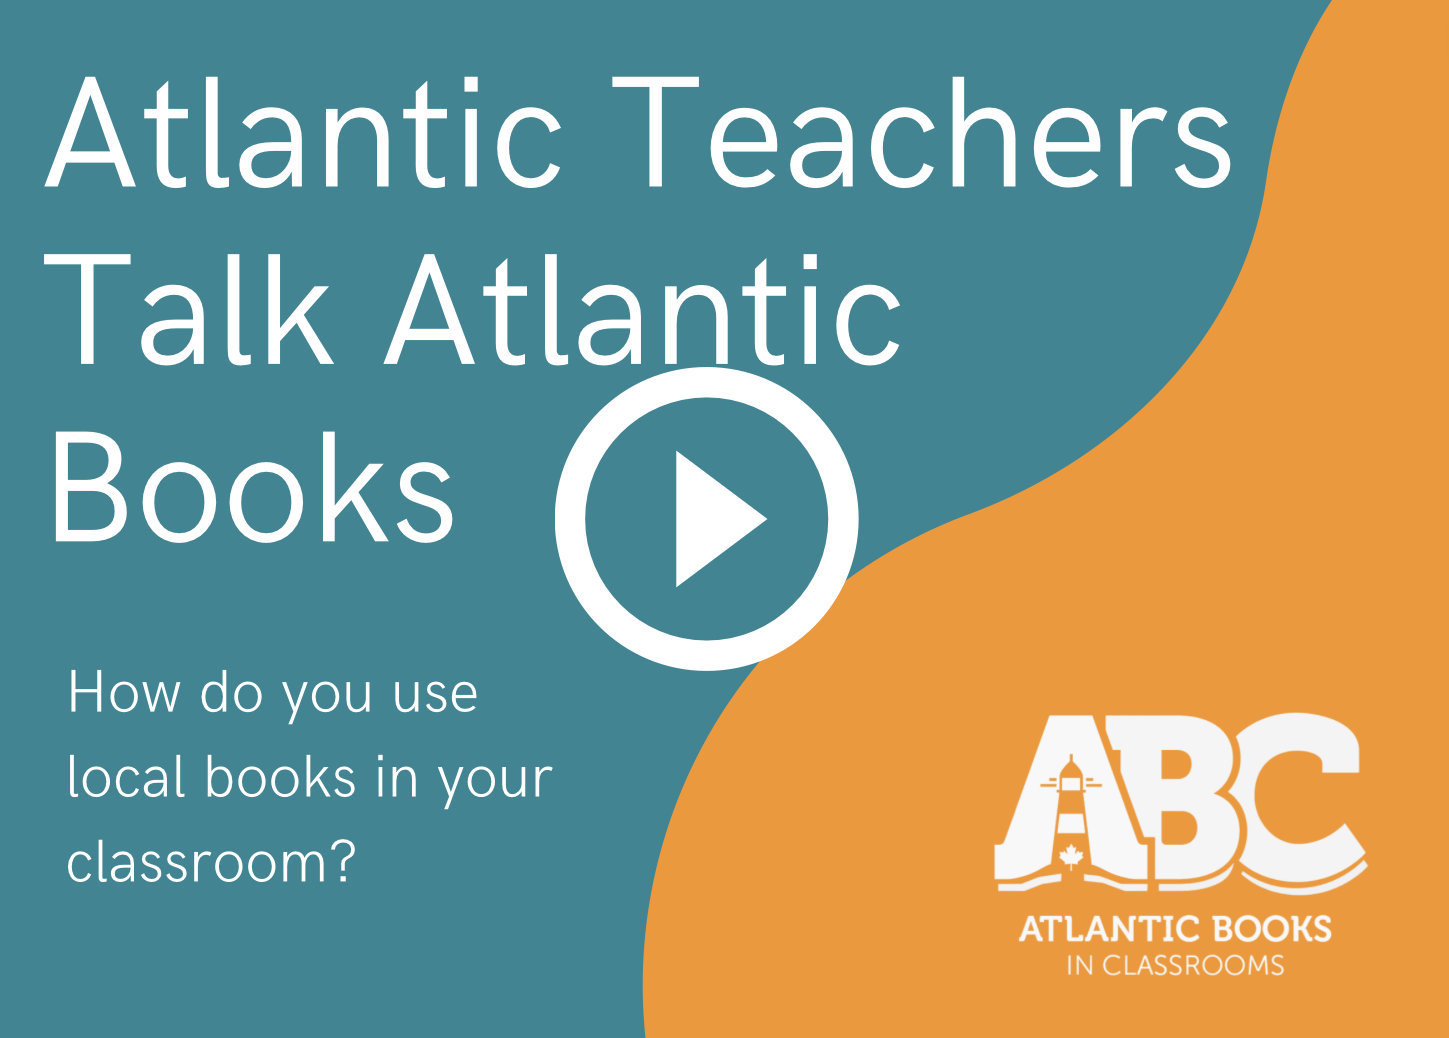 Atlantic Teachers Talk Atlantic Books